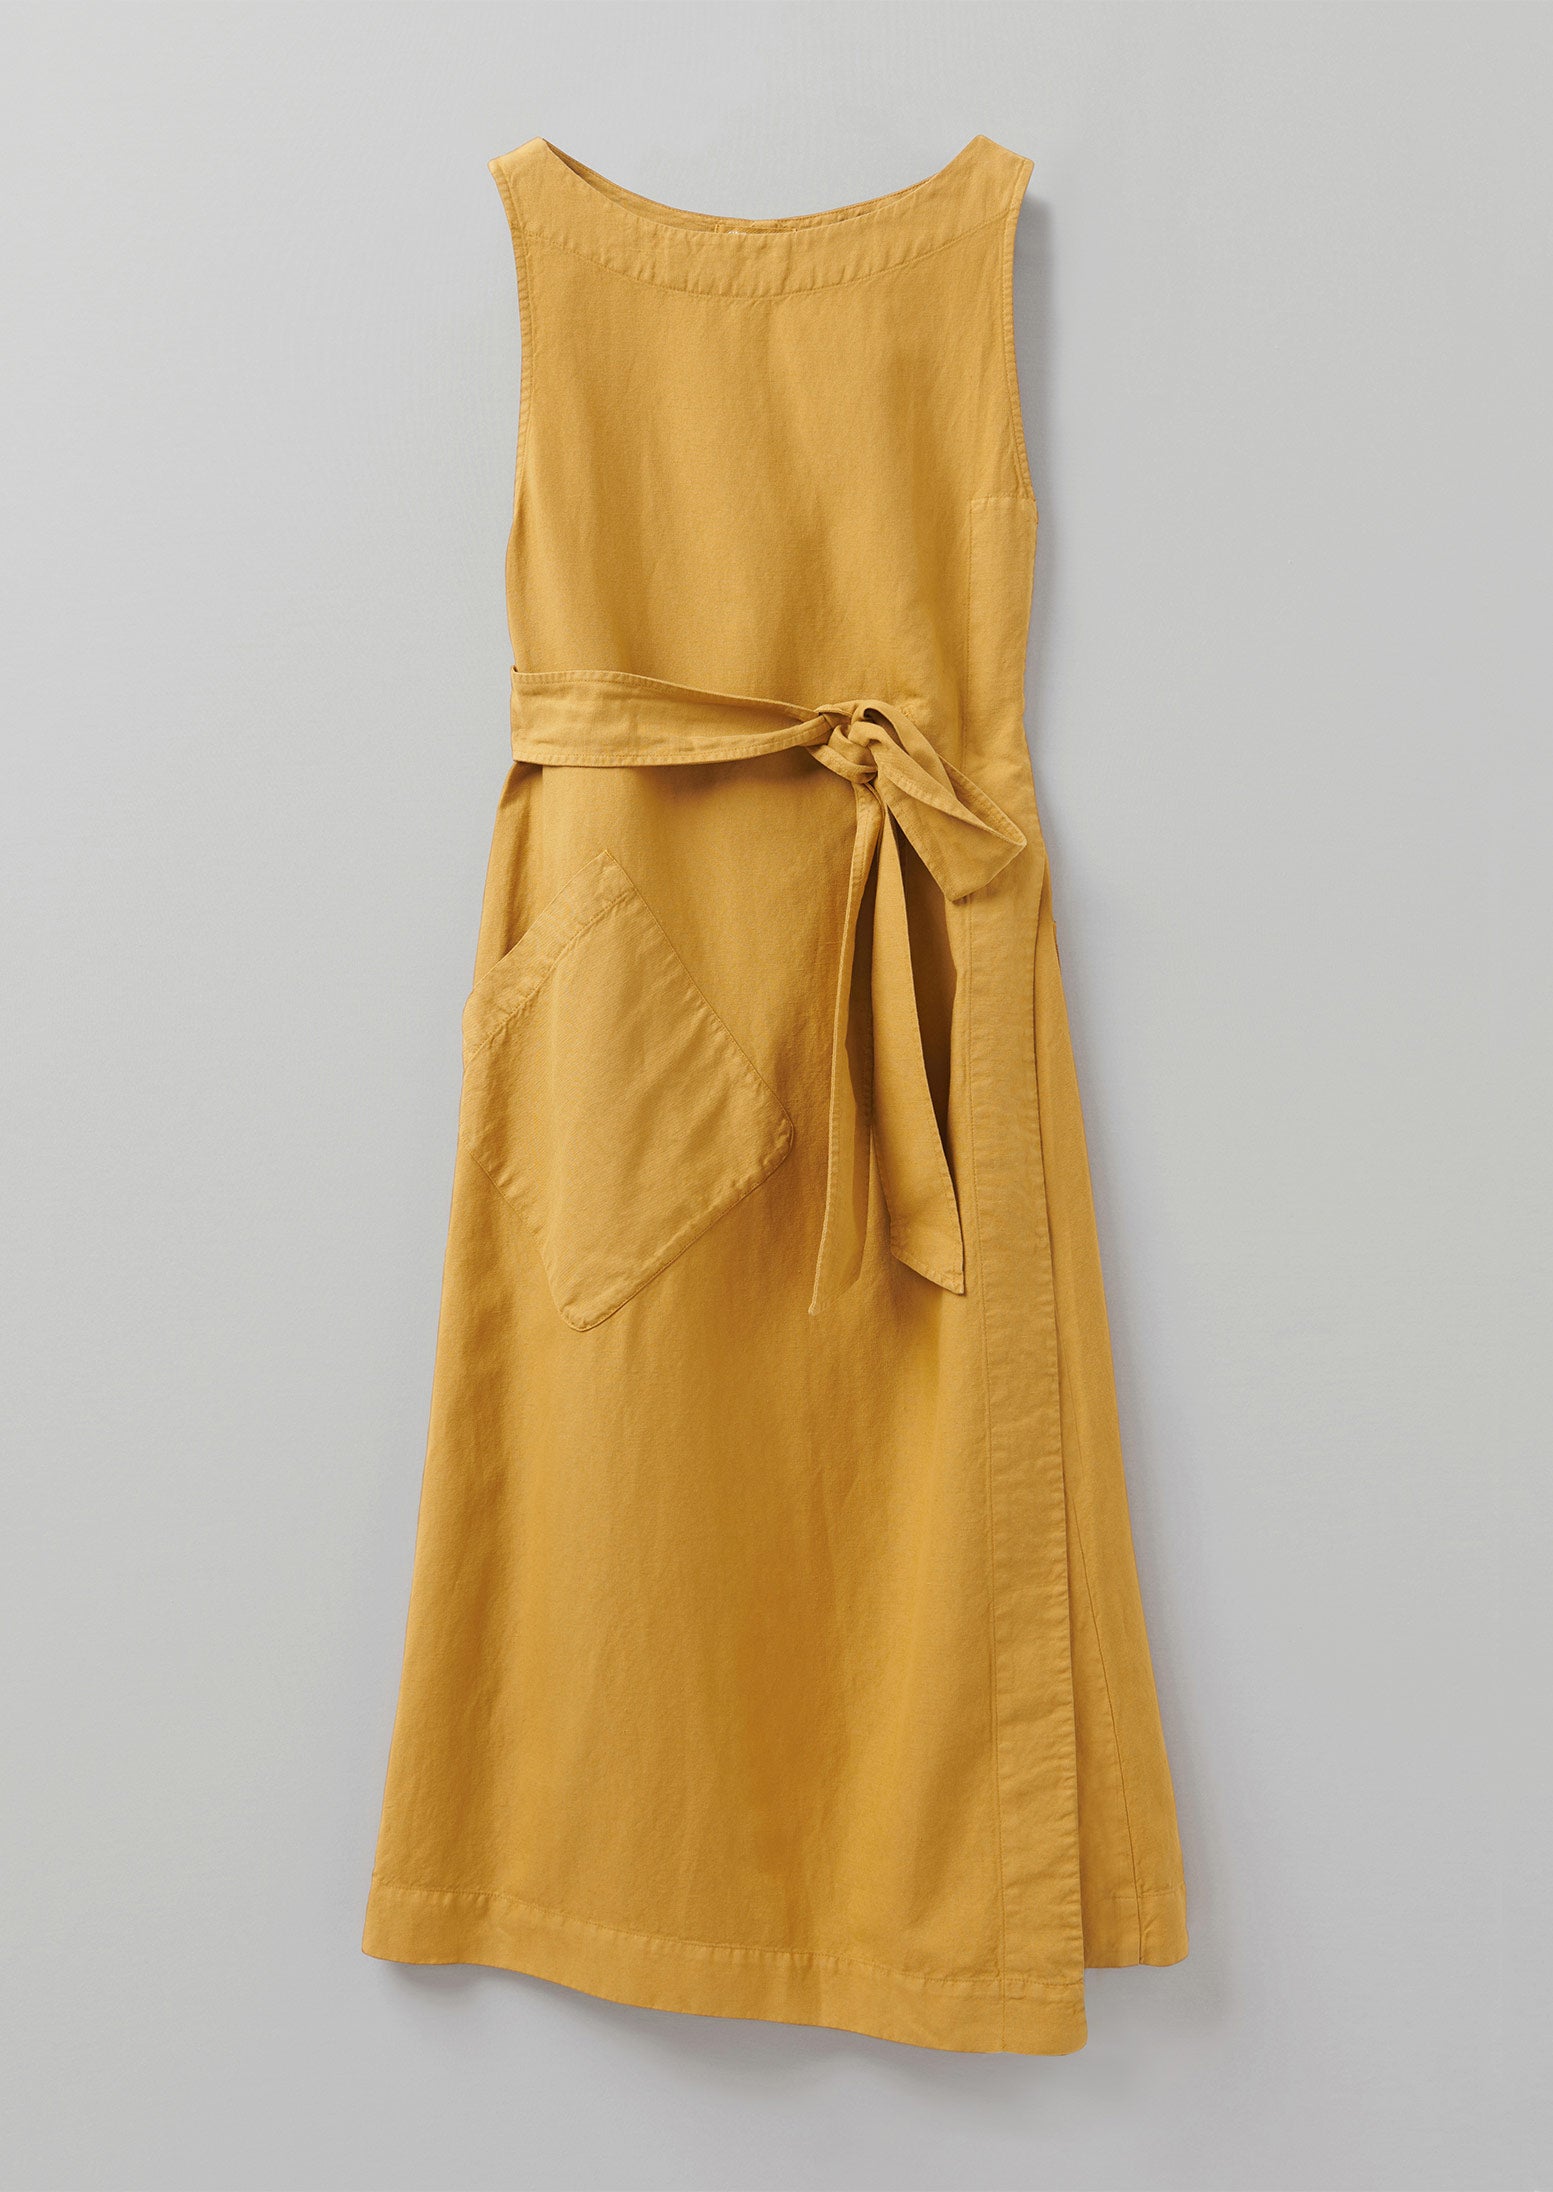 Cotton Linen Wrap Dress | Sahara Yellow ...